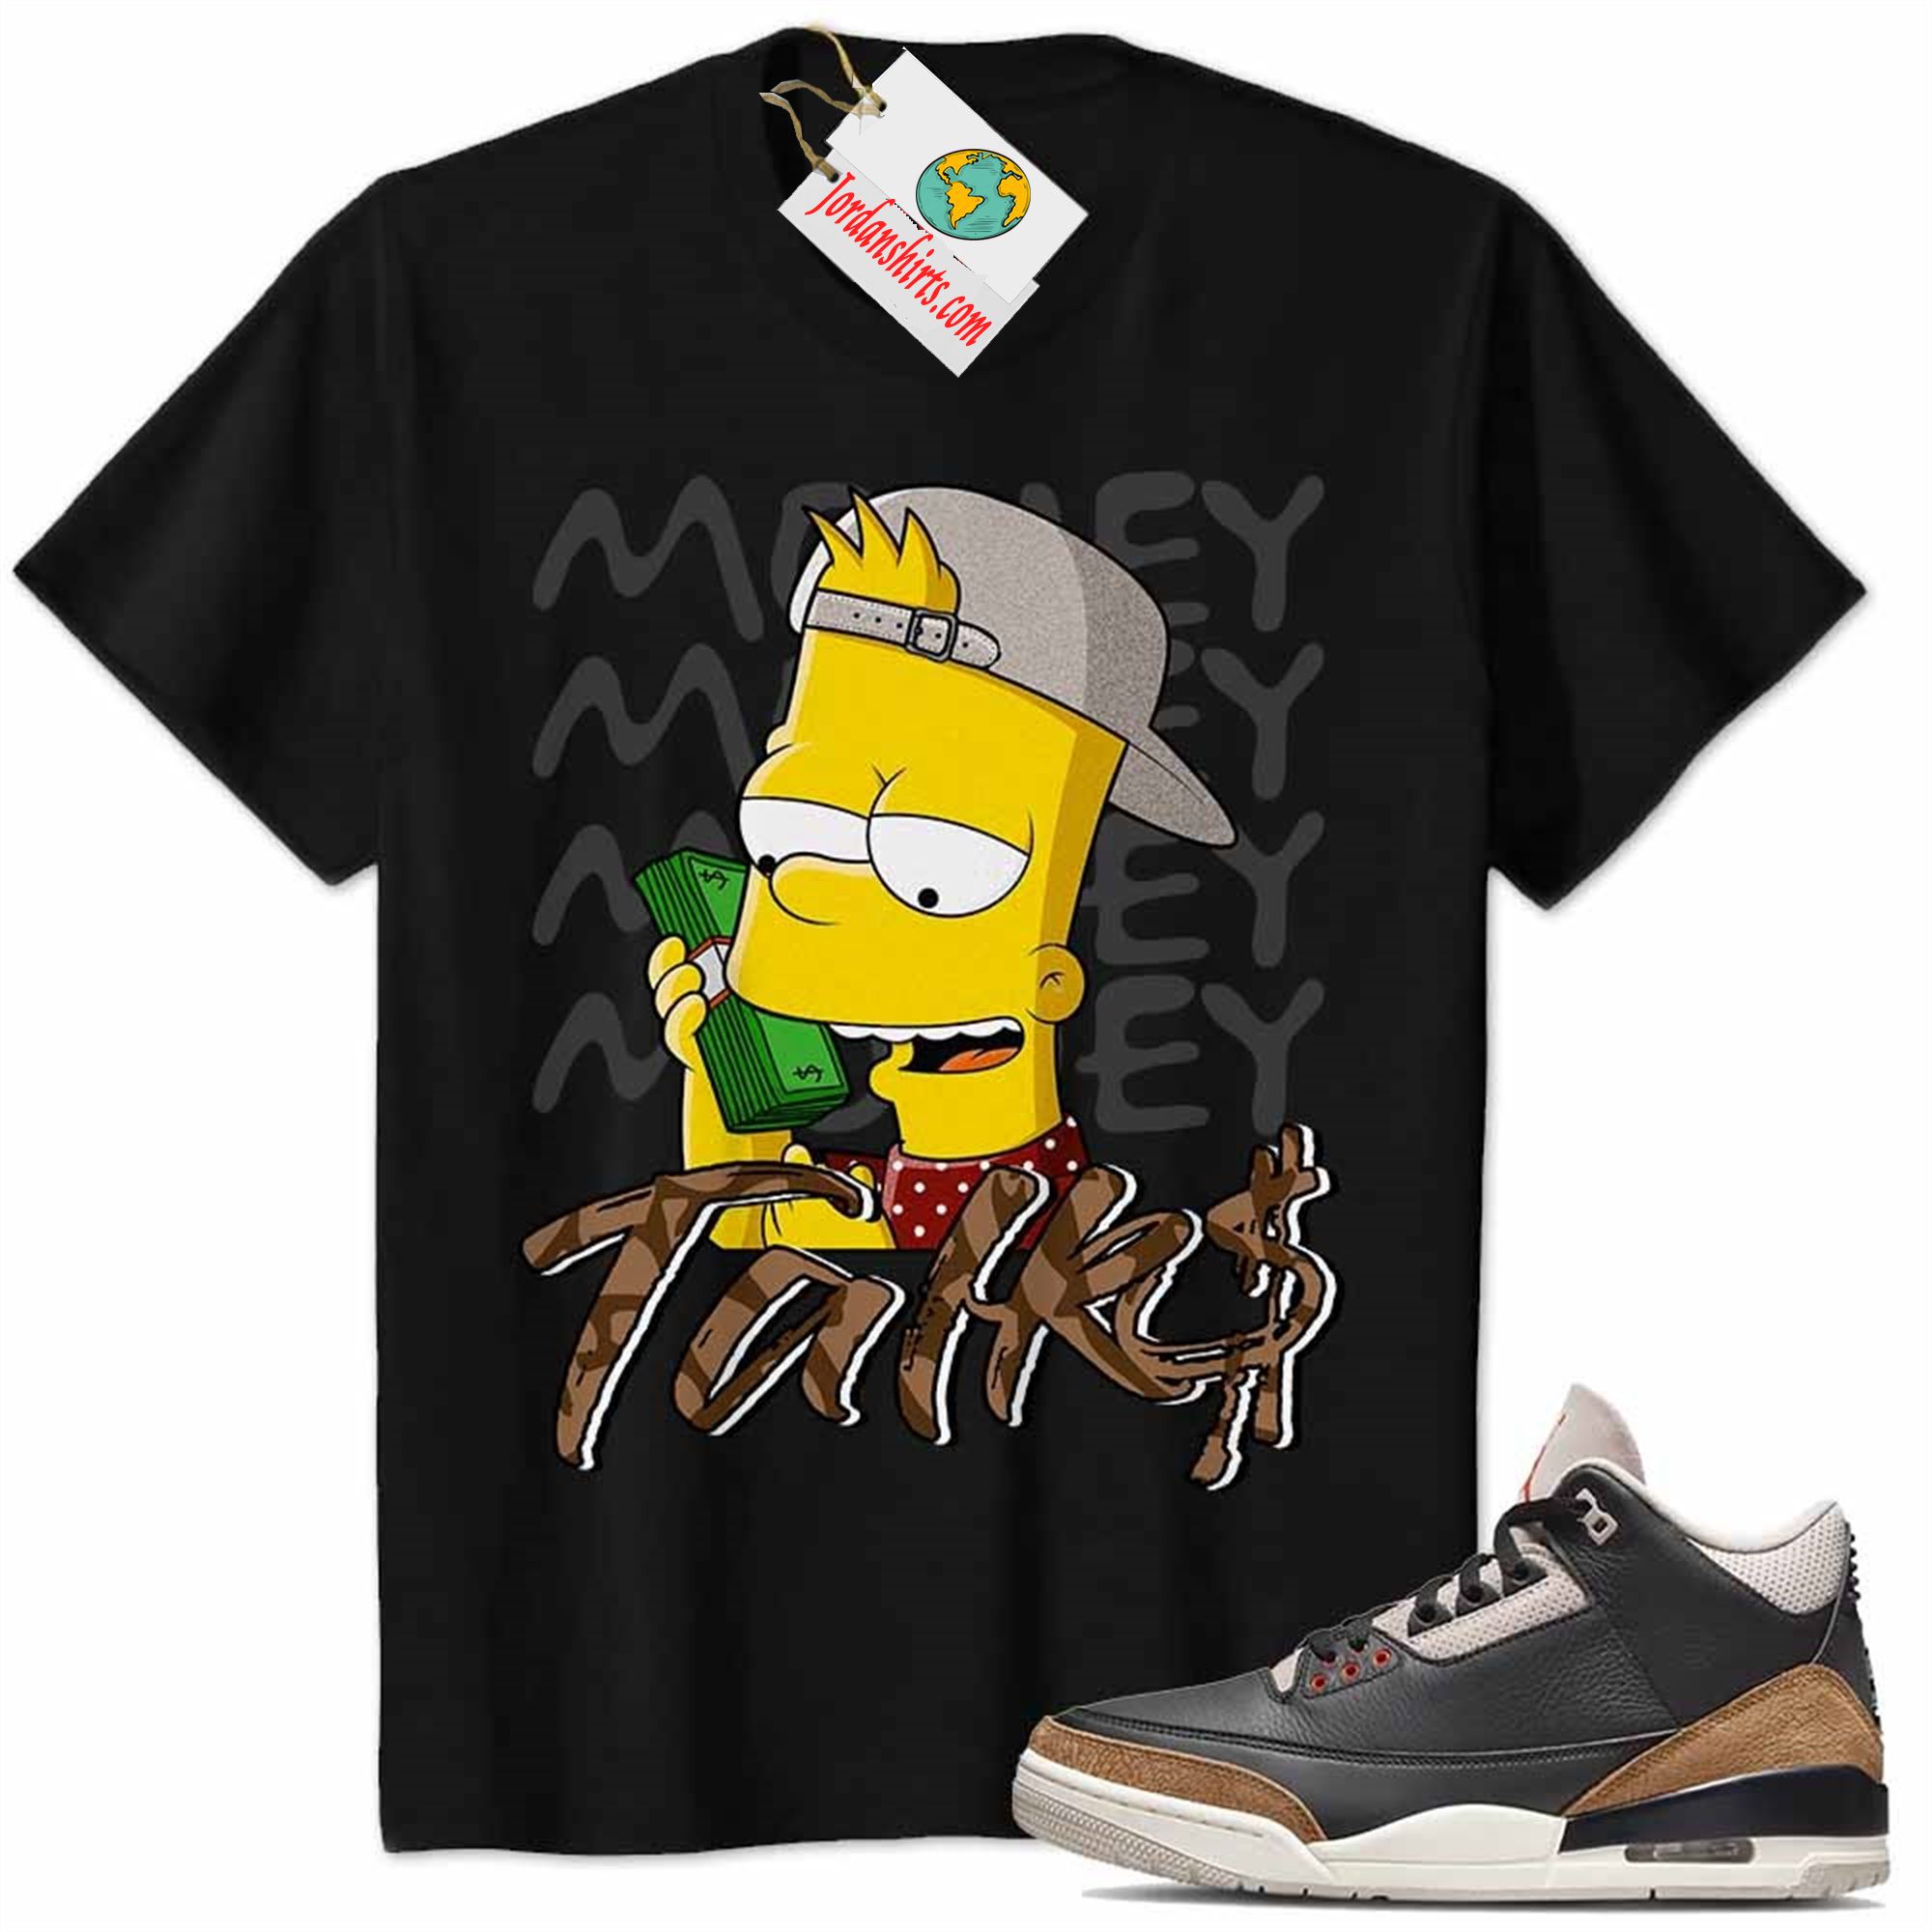 Jordan 3 Shirt, Jordan 3 Desert Elephant Shirt Shirt Money Talks Bart Simpson Rich Black Plus Size Up To 5xl